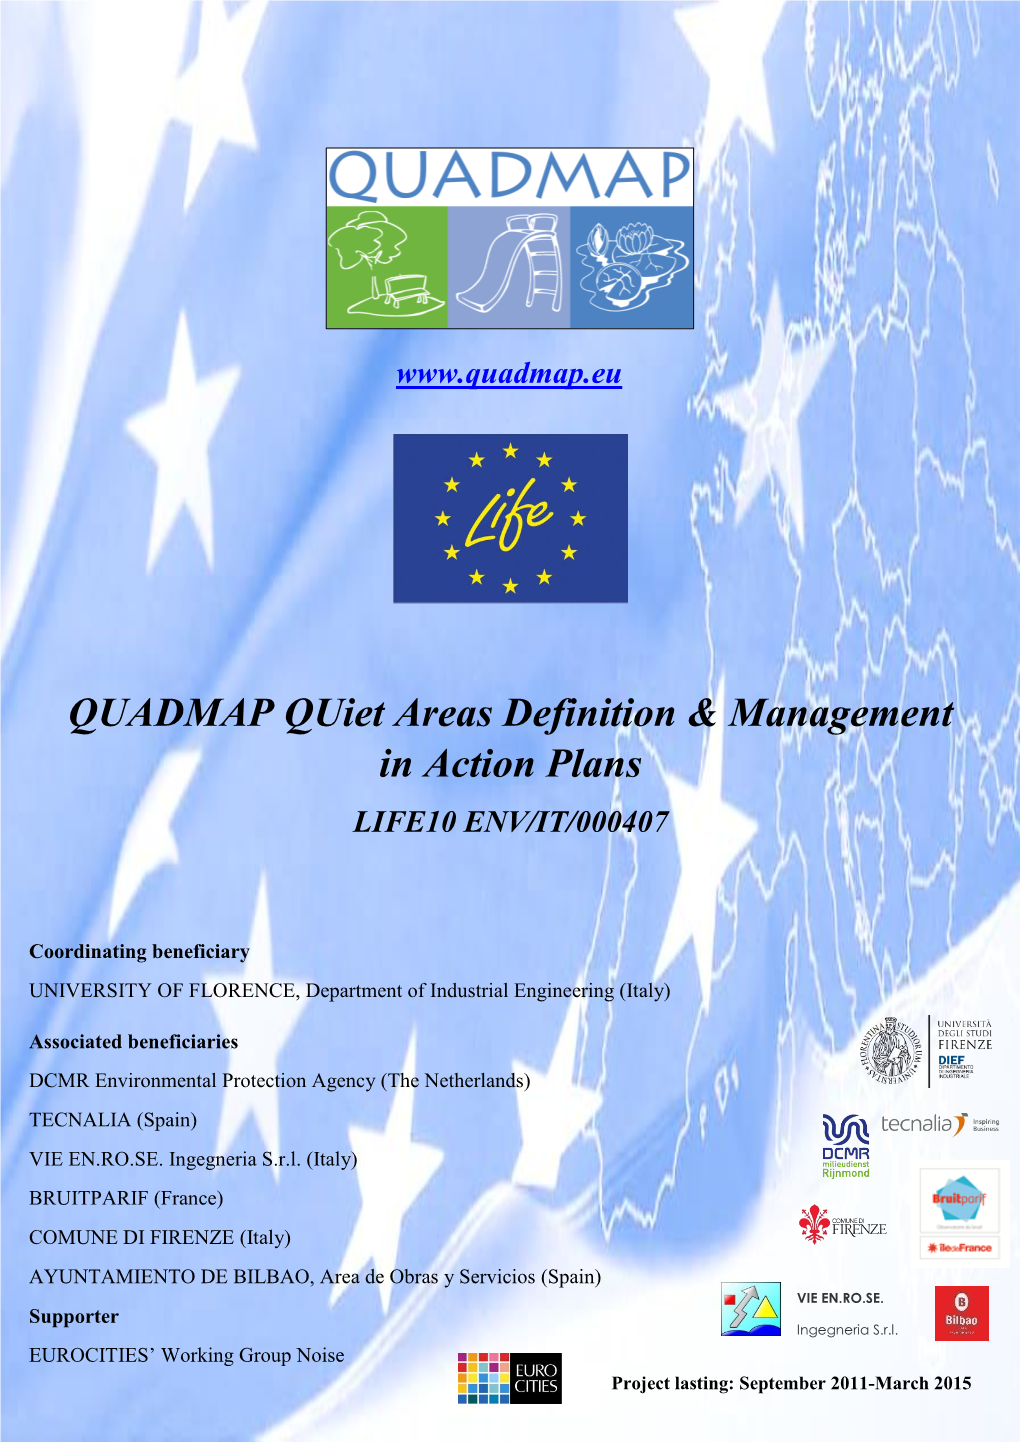 QUADMAP Quiet Areas Definition & Management in Action Plans